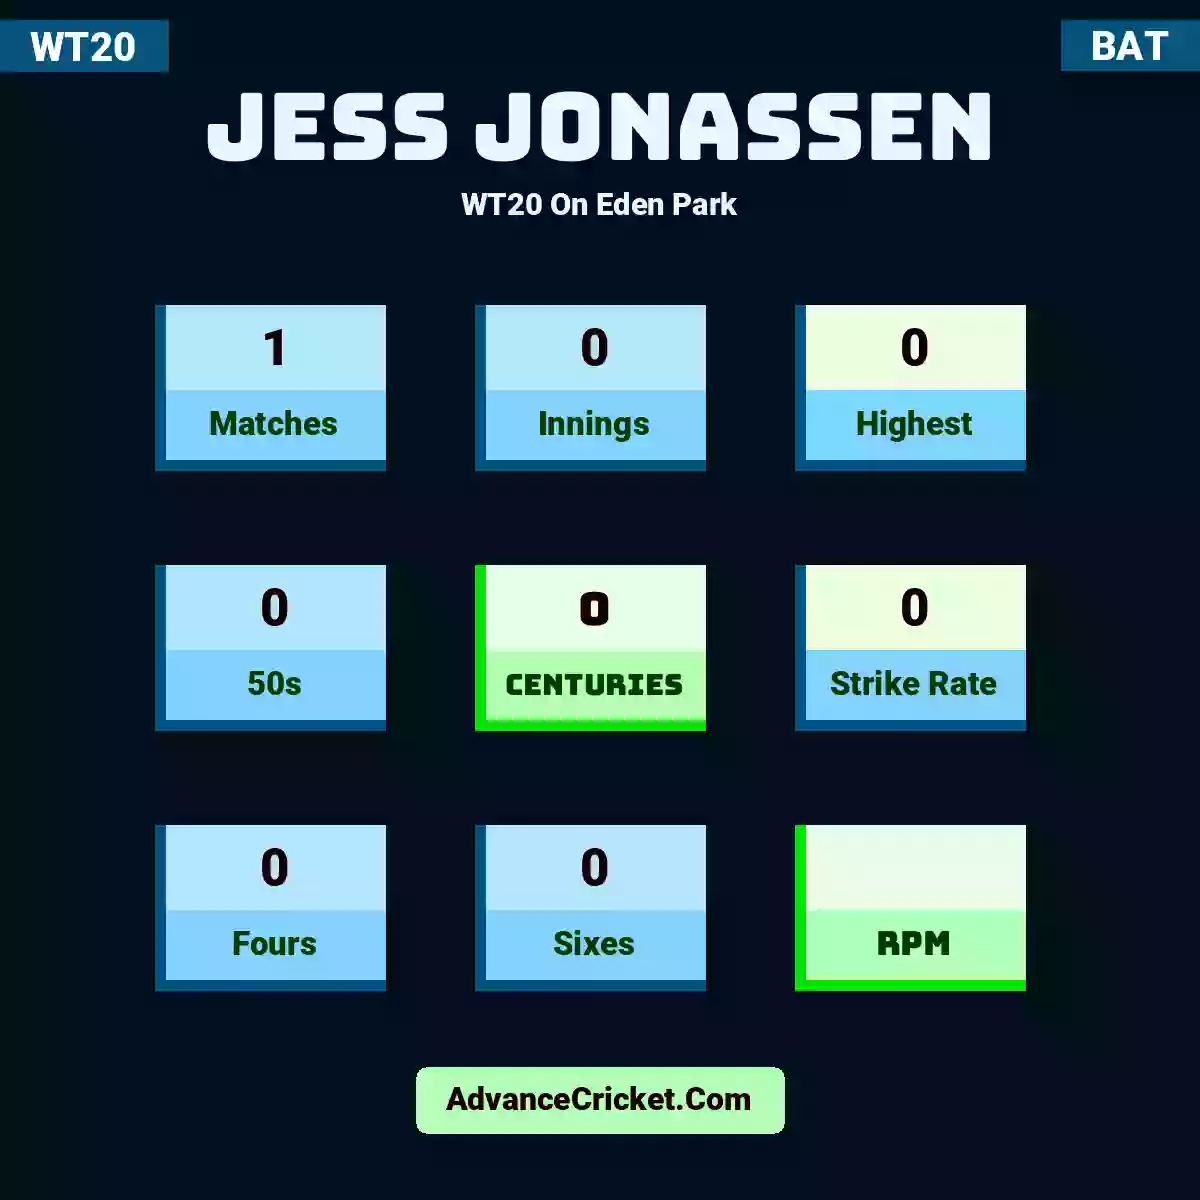 Jess Jonassen WT20  On Eden Park, Jess Jonassen played 1 matches, scored 0 runs as highest, 0 half-centuries, and 0 centuries, with a strike rate of 0. J.Jonassen hit 0 fours and 0 sixes.